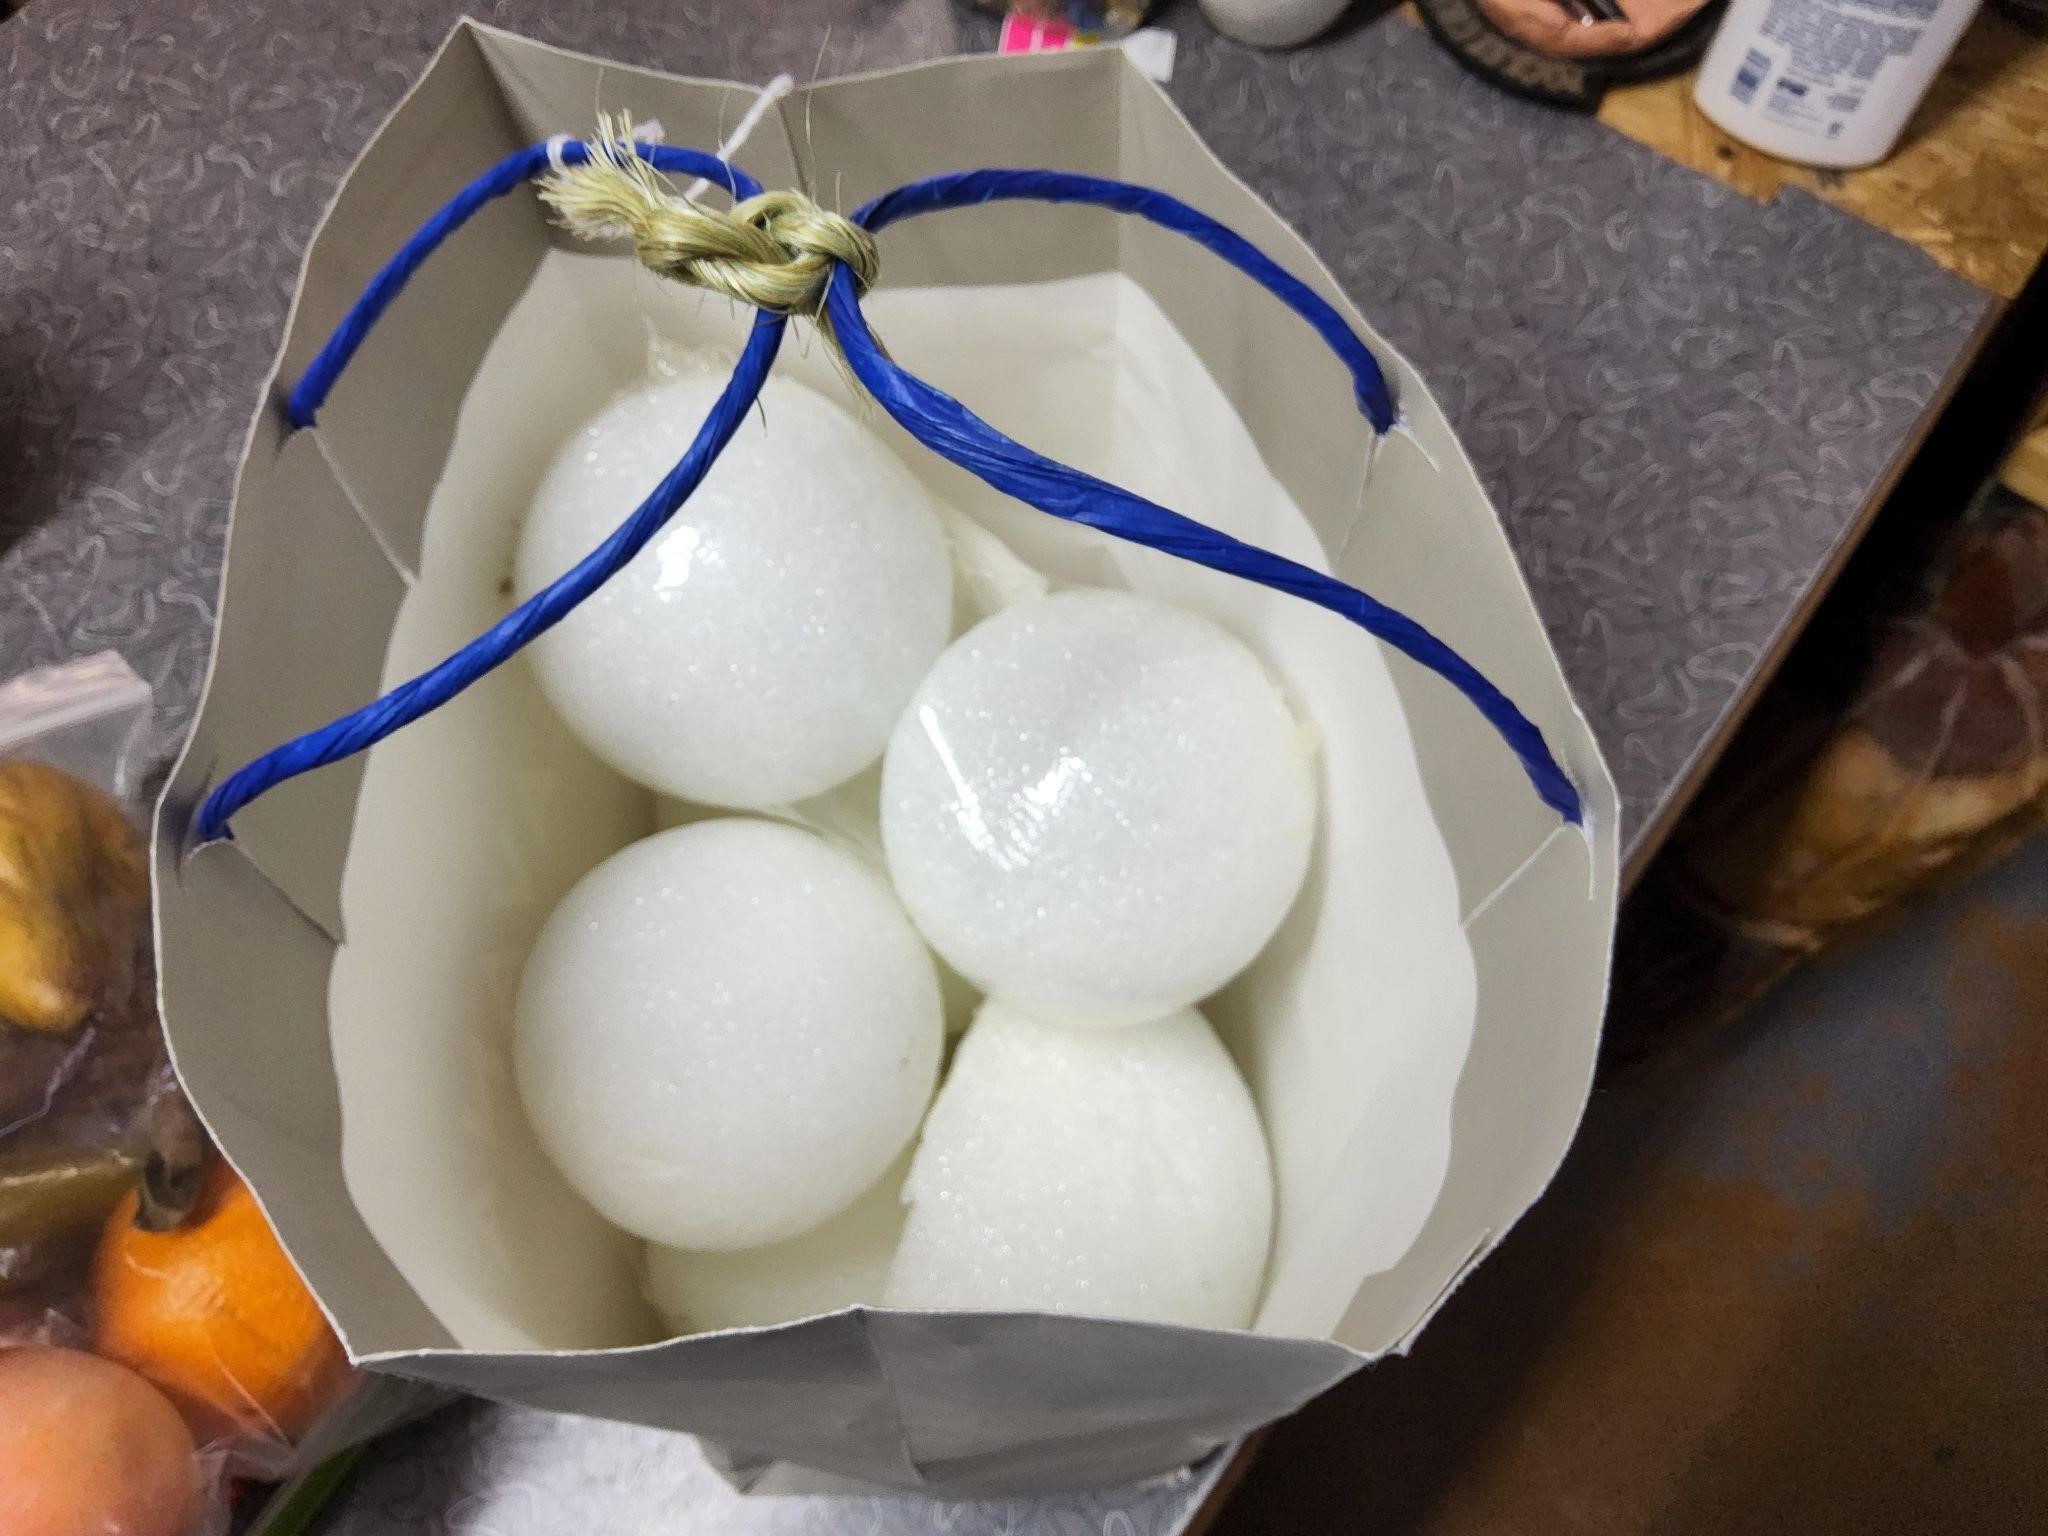 bag of foam craft balls